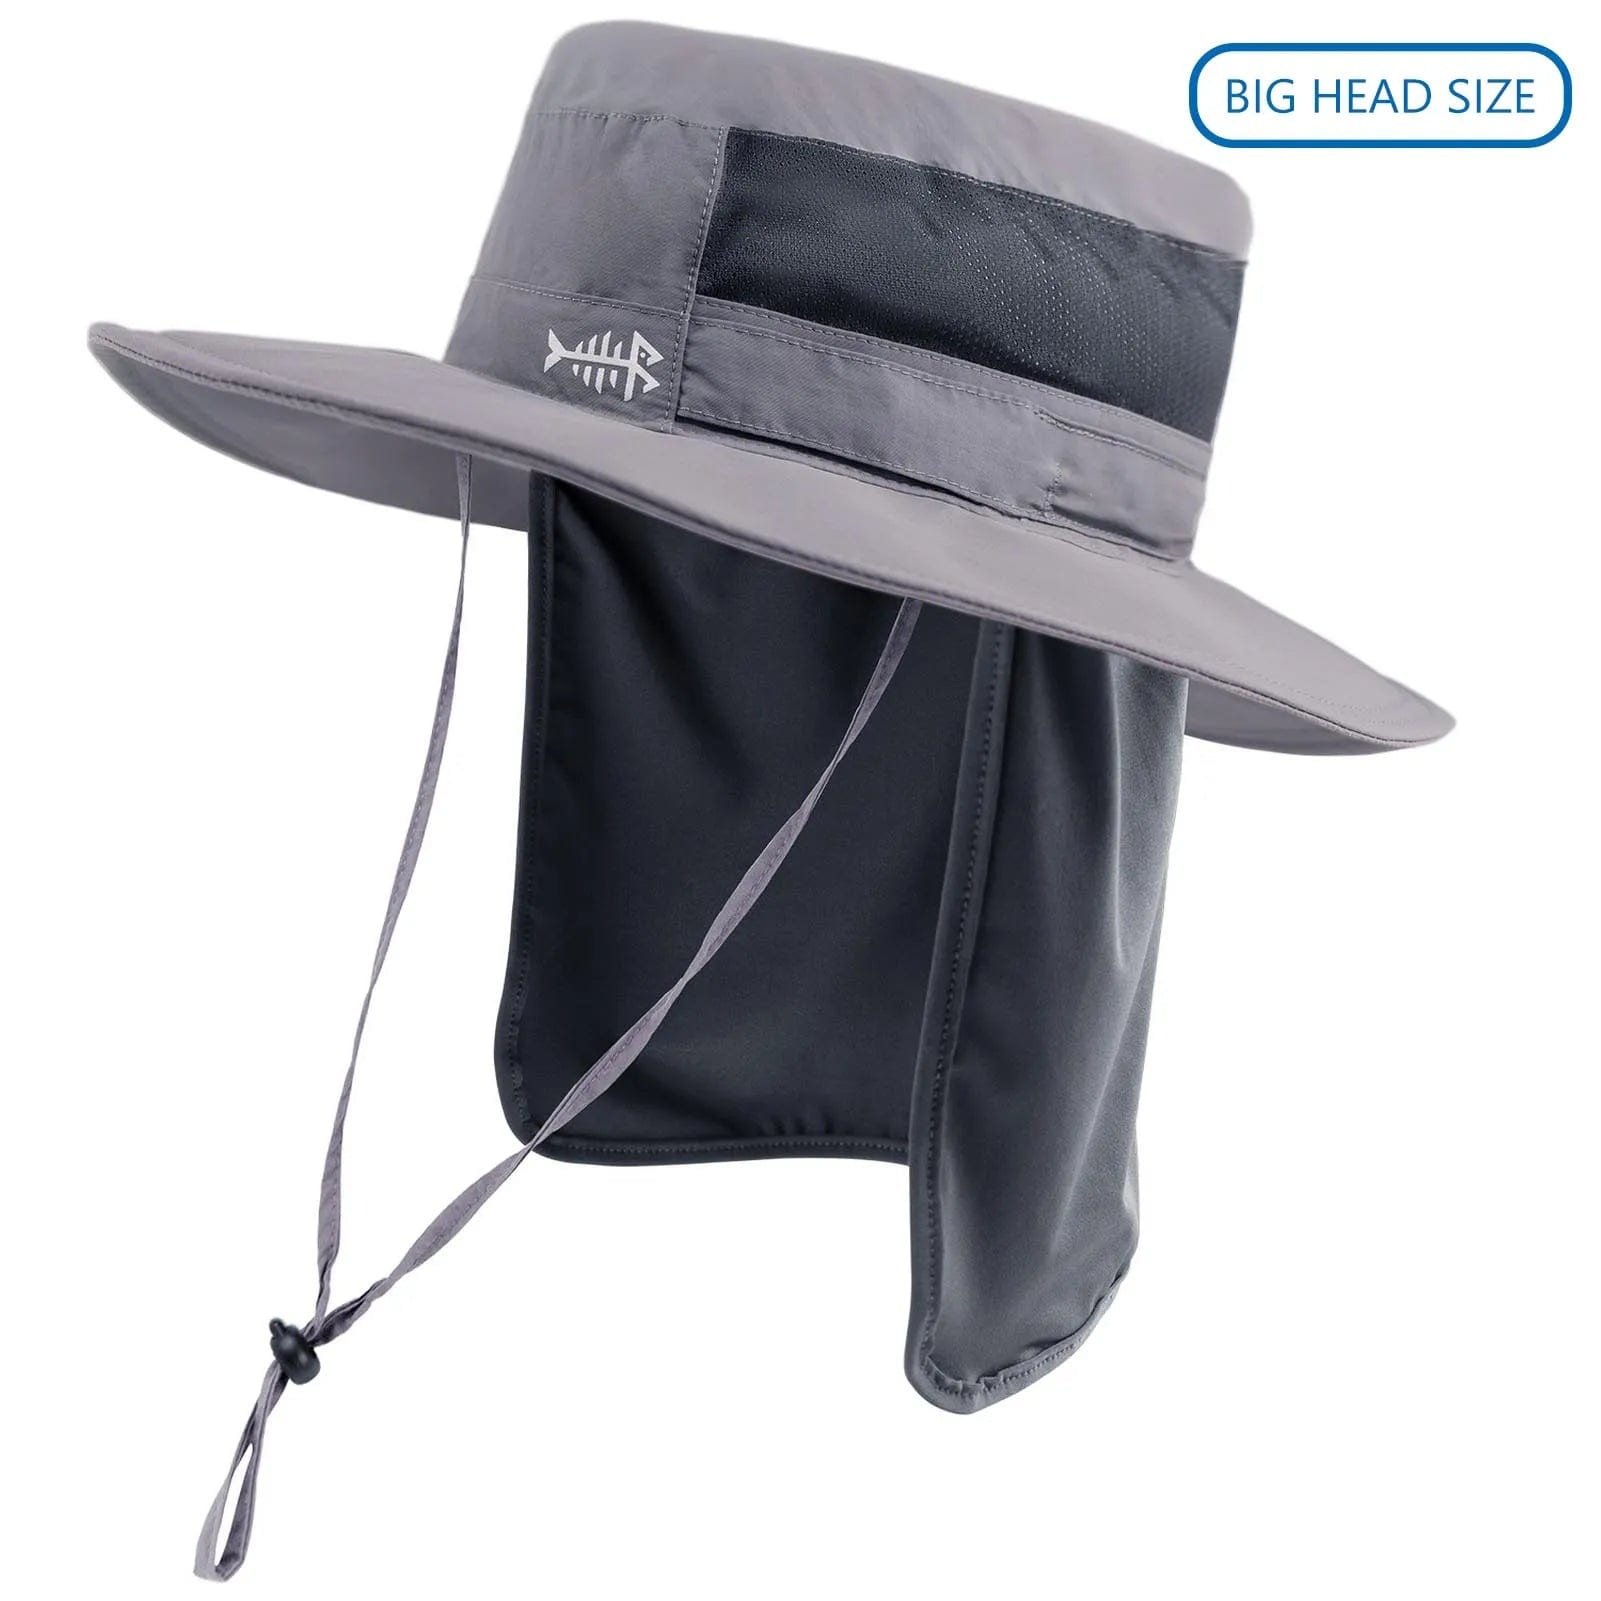 Bassdash UPF 50+ Sun Fishing Hat Water Resistant with Detachable Neck Flap